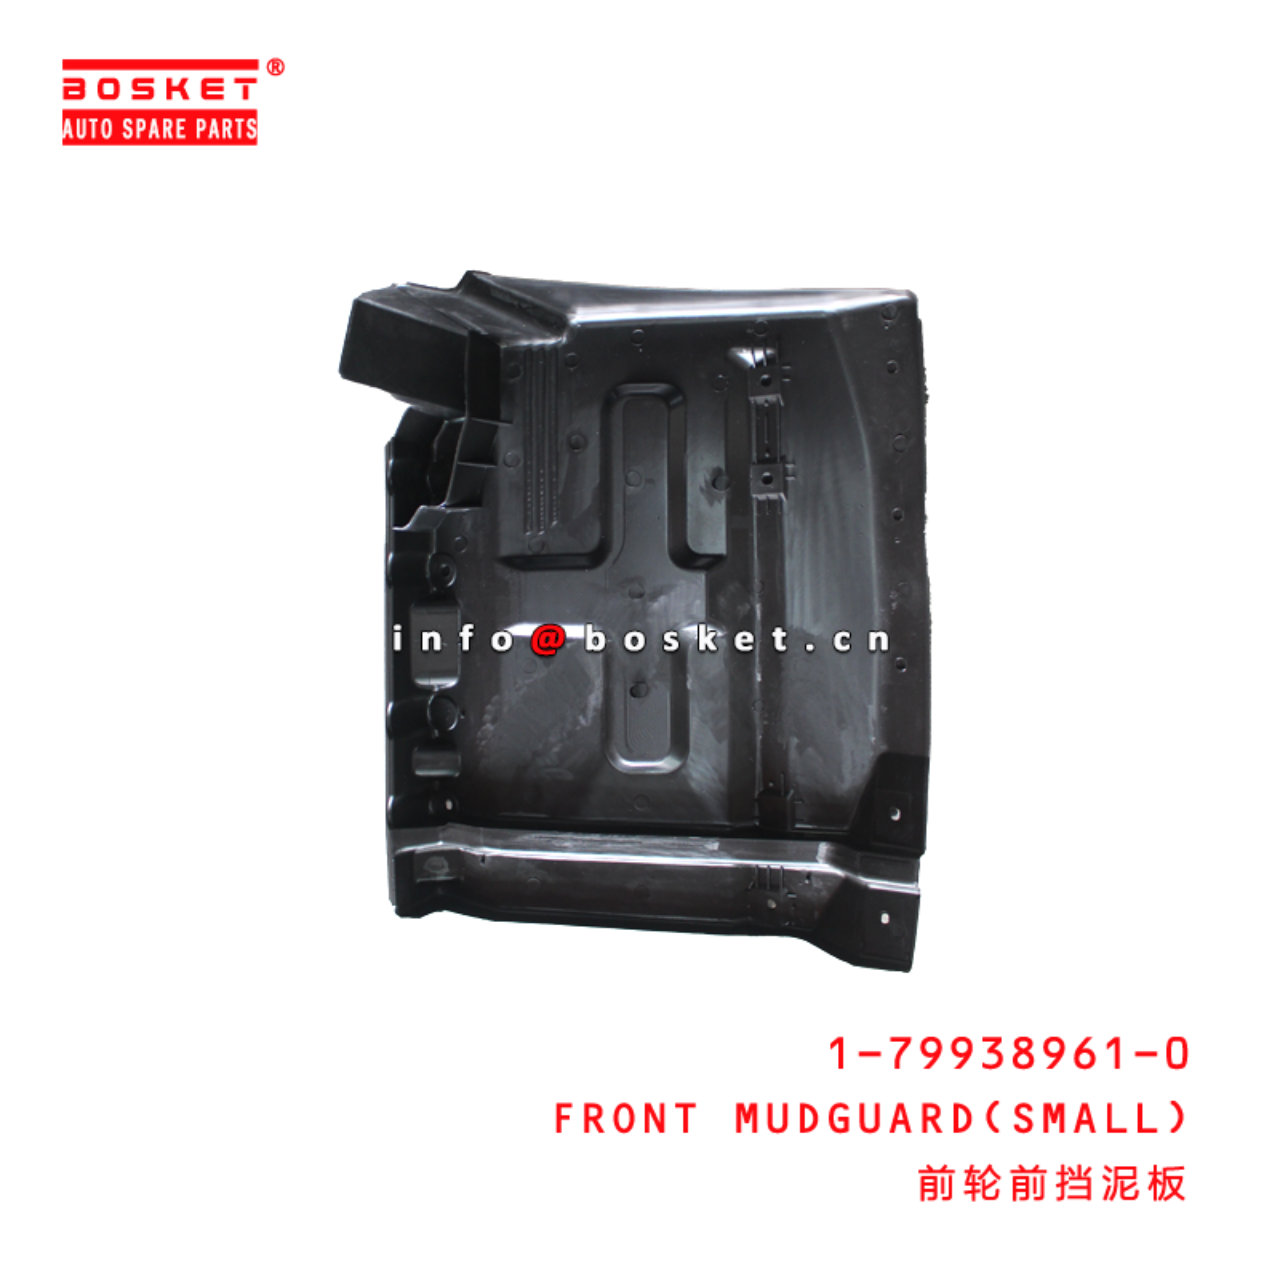 1-79938961-0 Front Mudguard(Small) Suitable for ISUZU FRR FSR FTR  1799389610